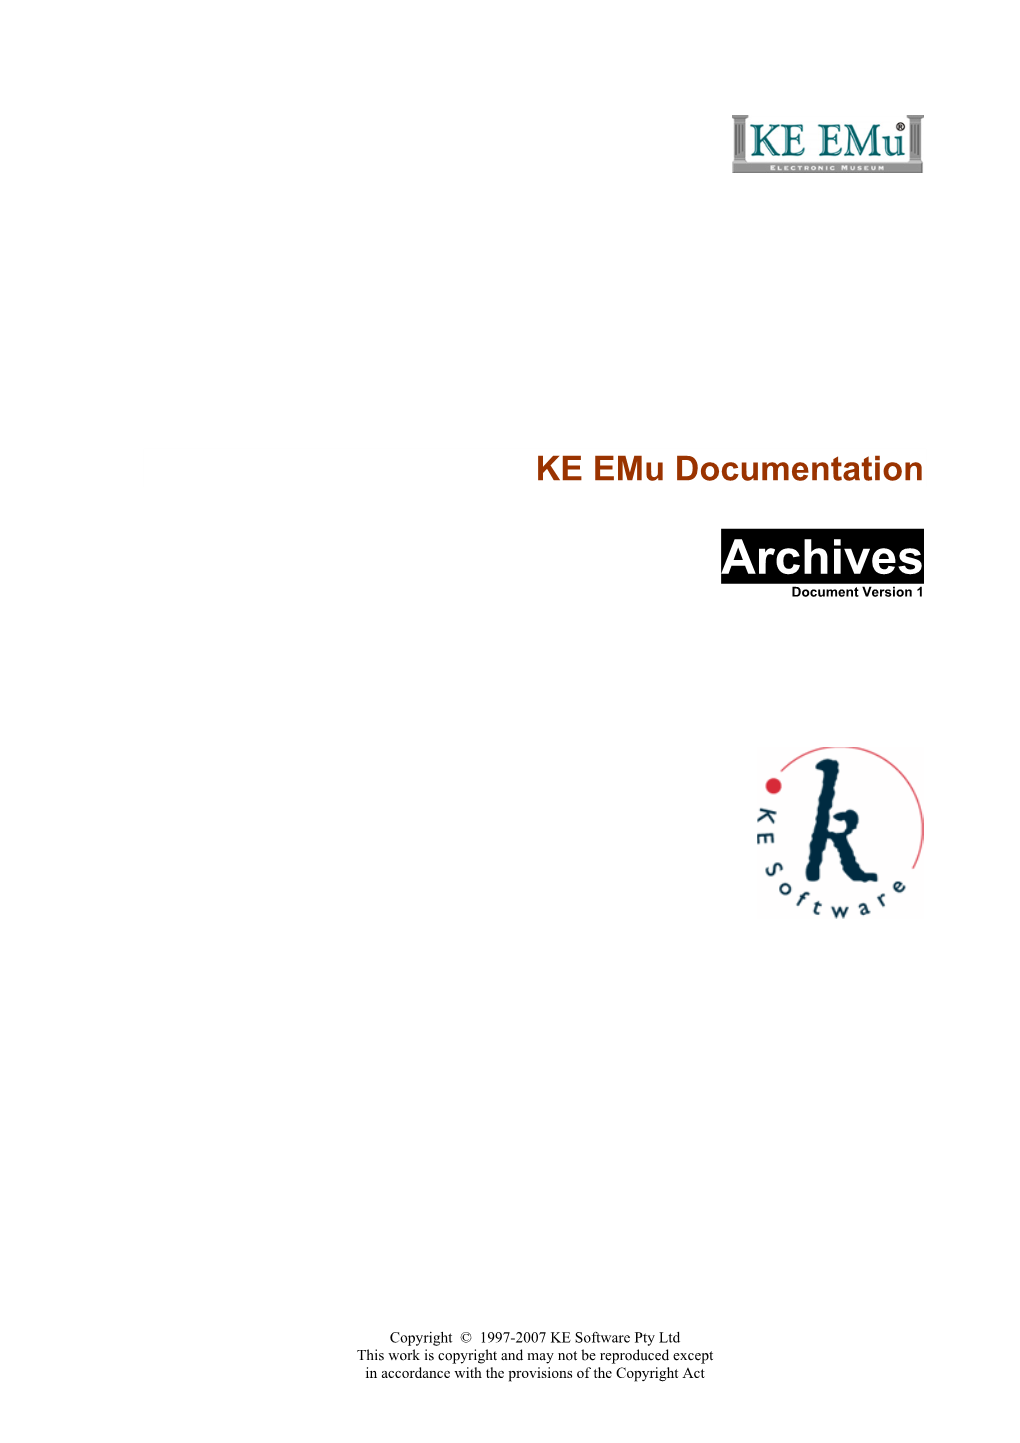 Archives Document Version 1